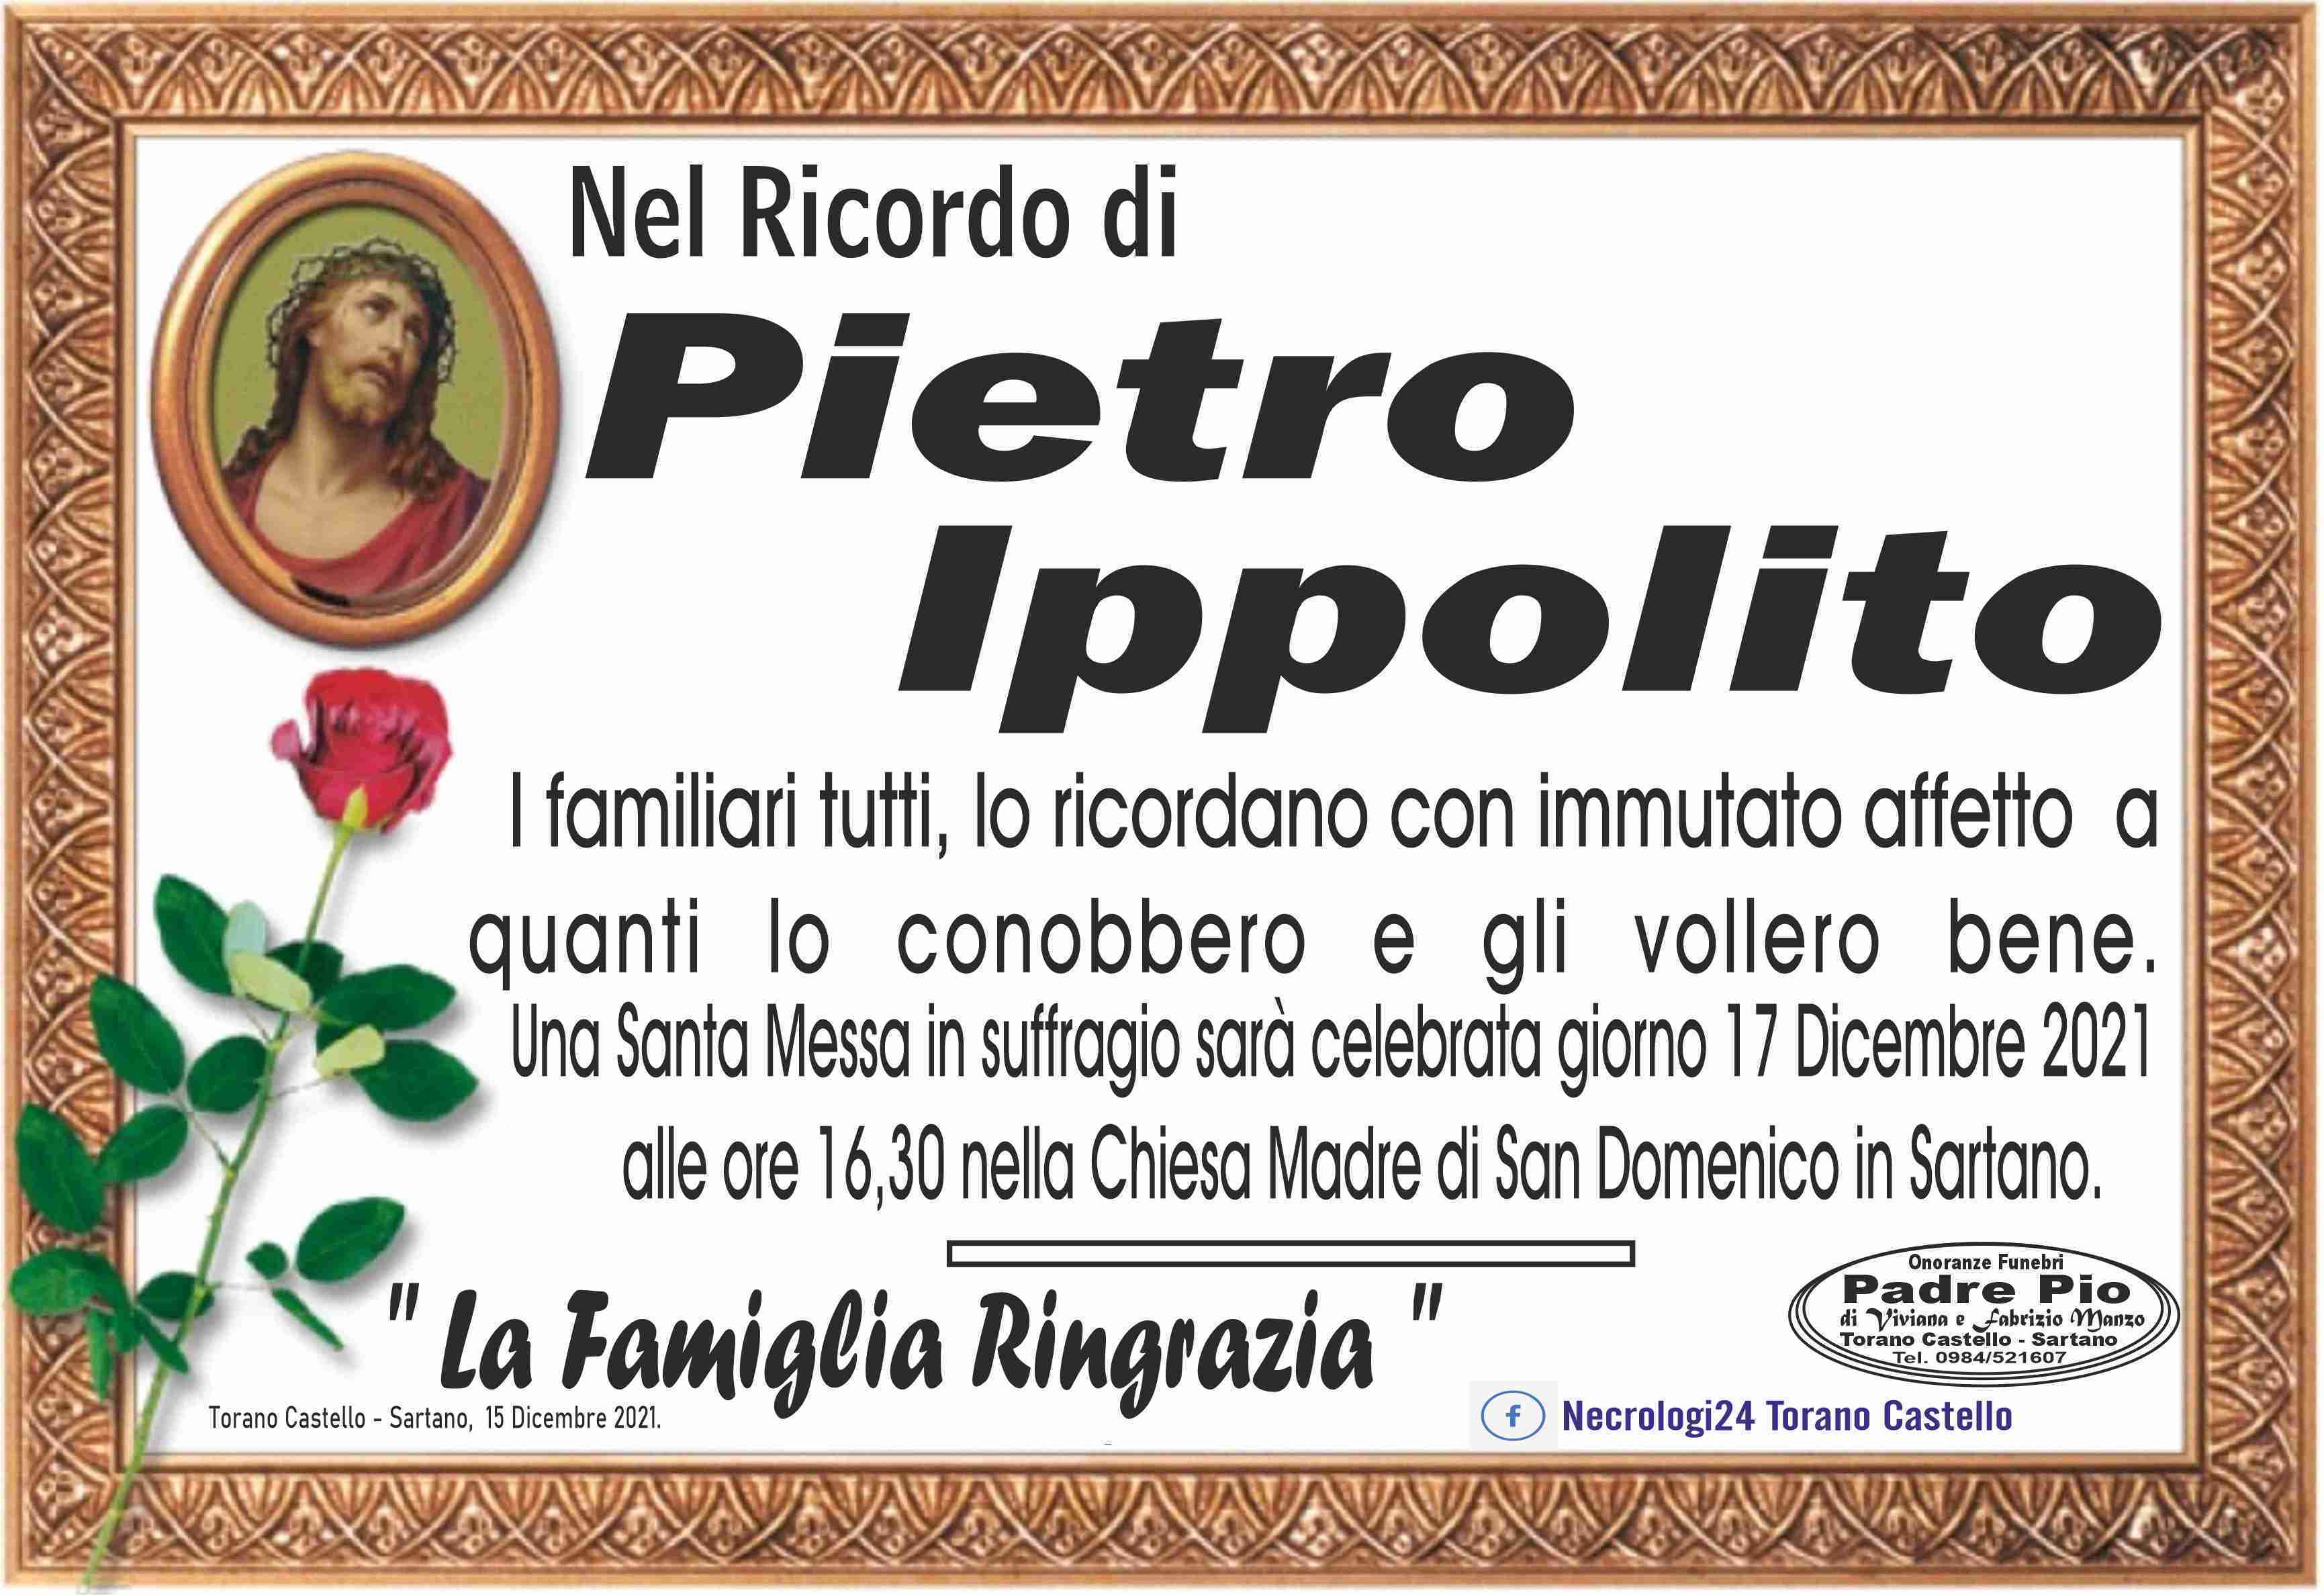 Pietro Ippolito